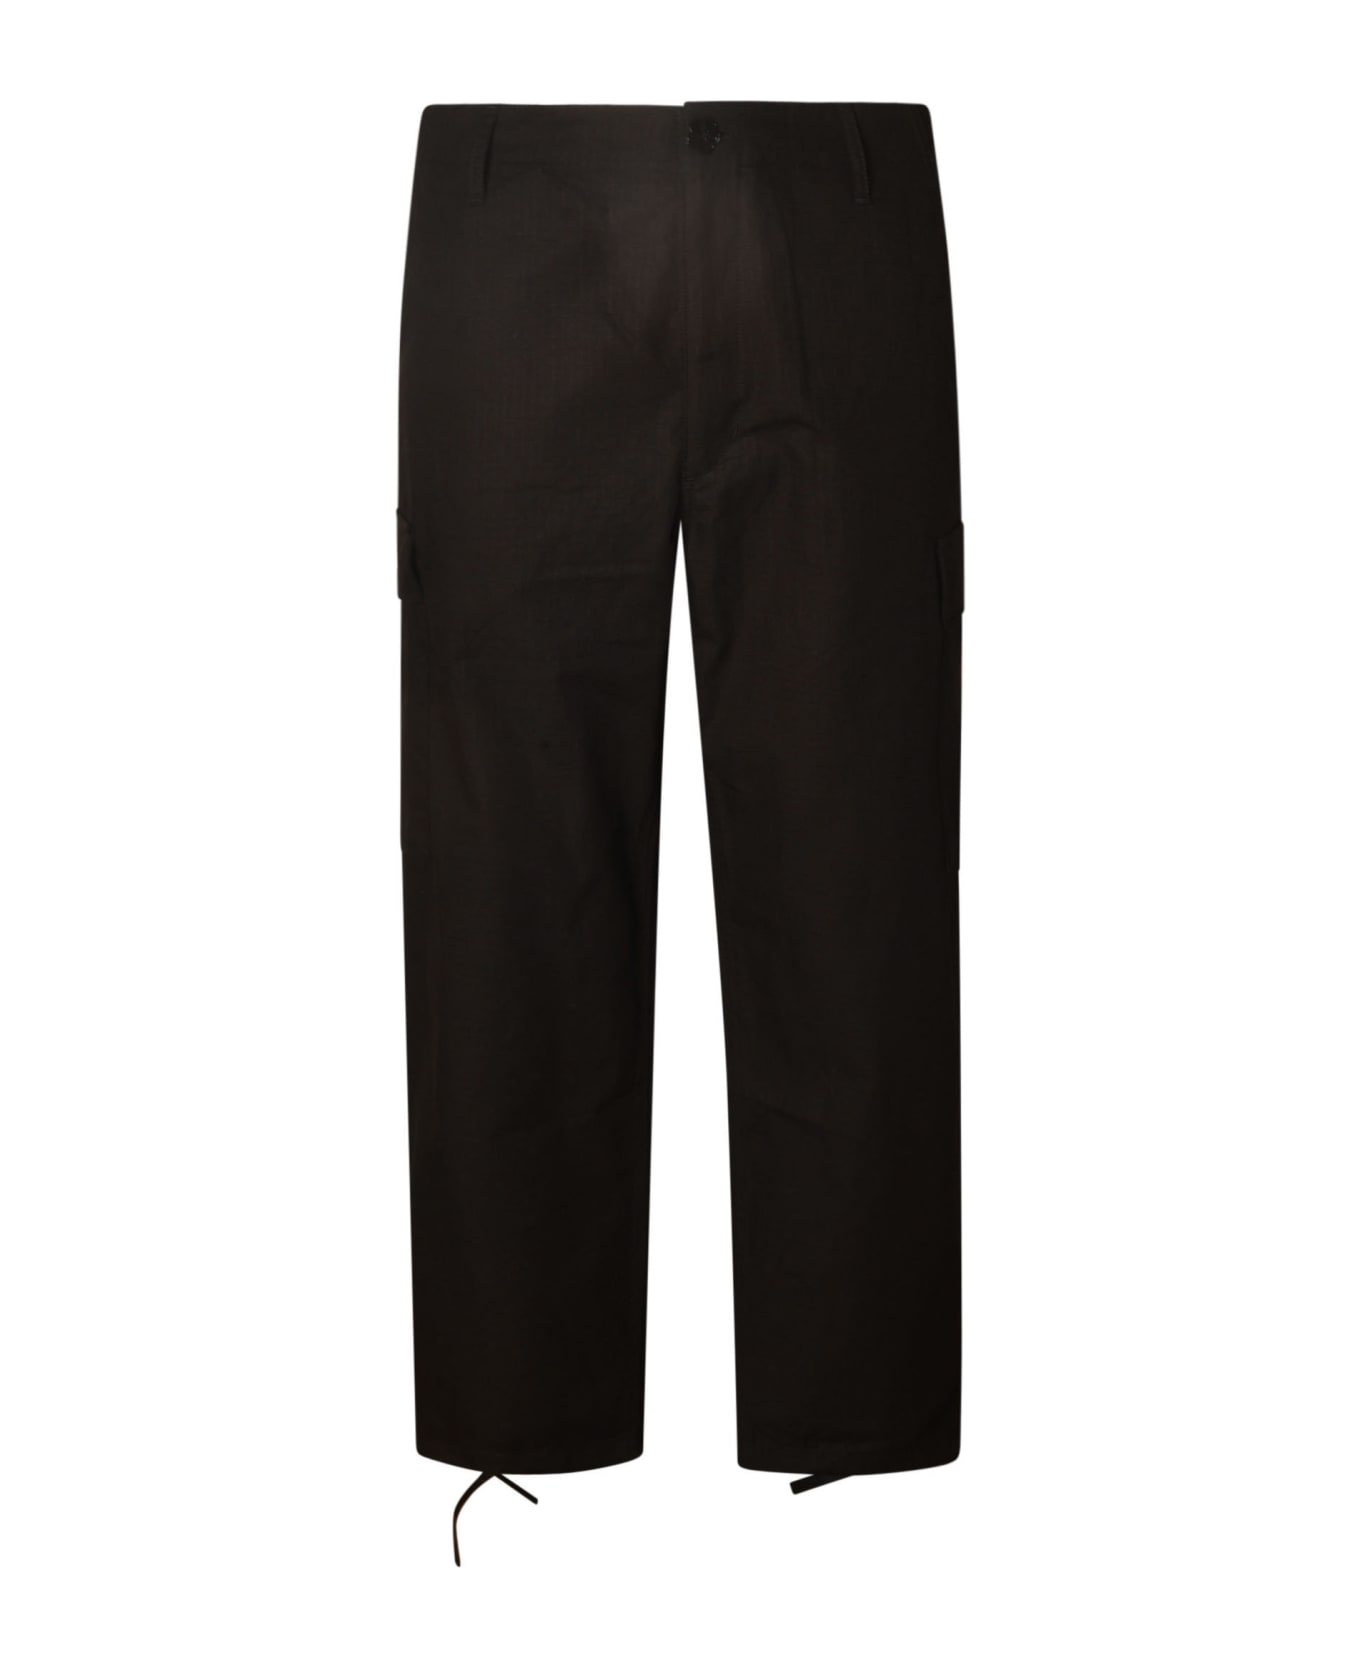 Kenzo Workwear Cargo Pants - Black